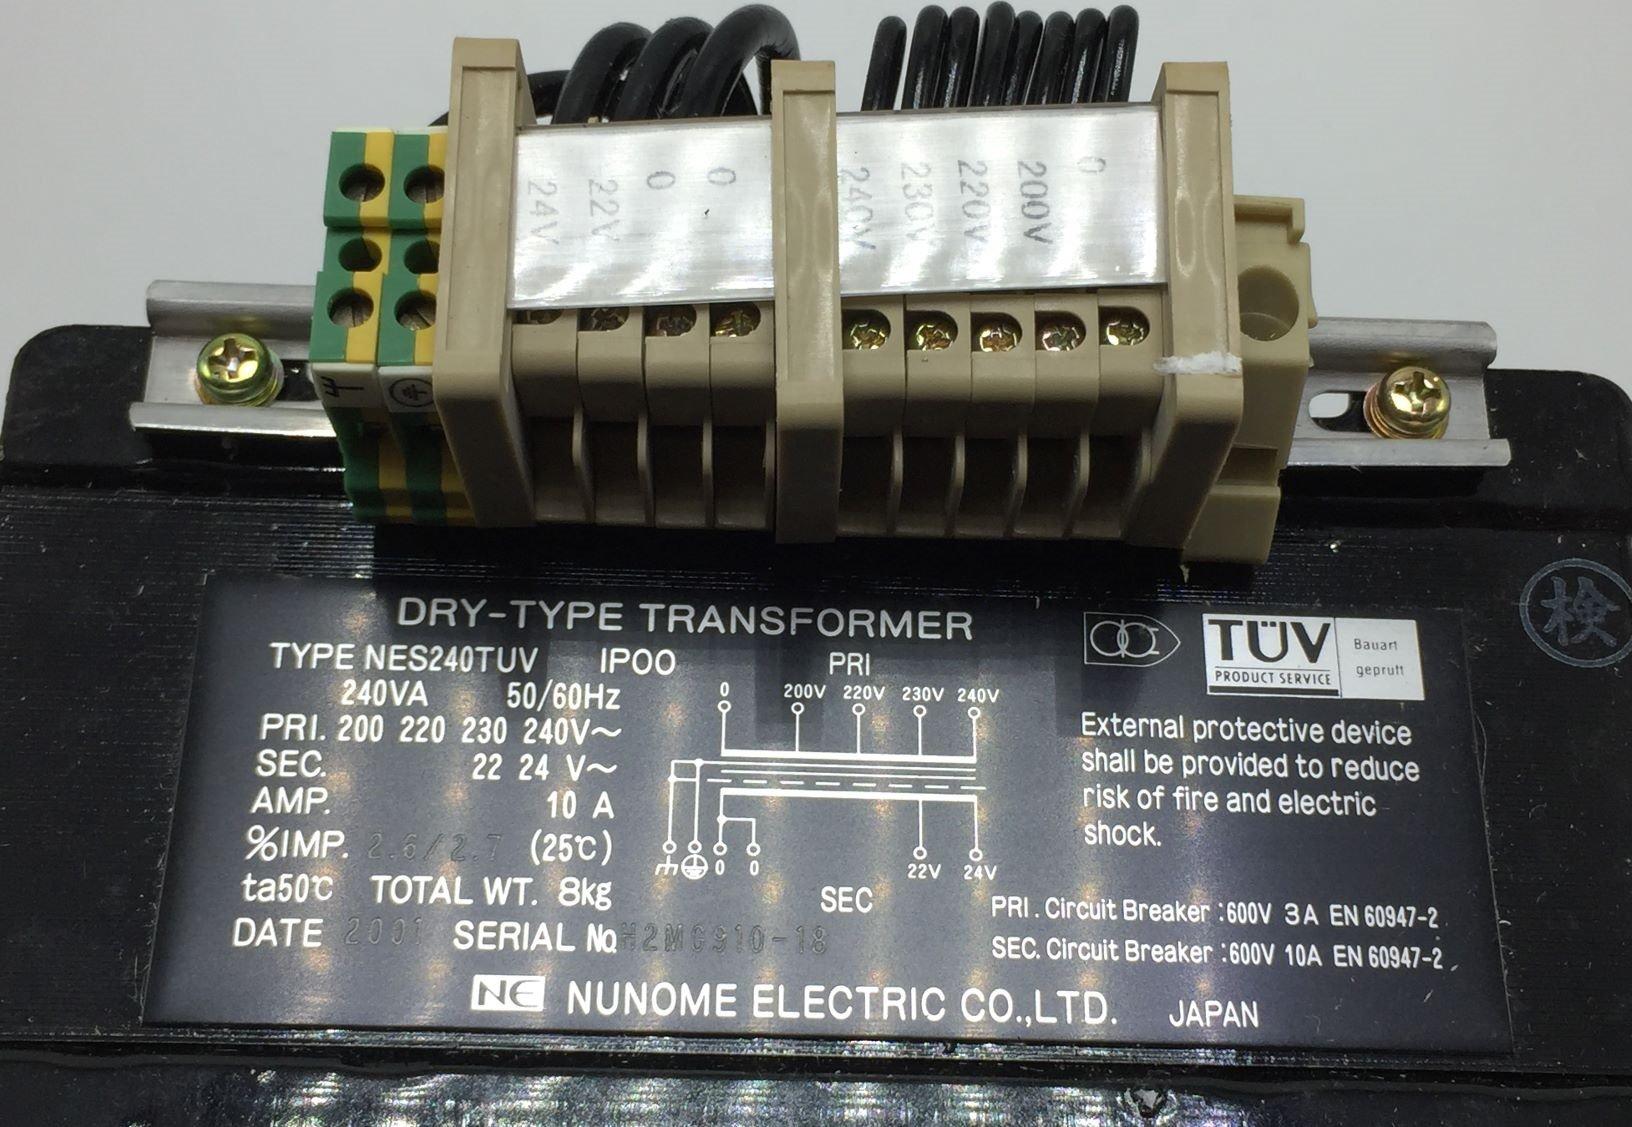 NEW NUNOME ELECTRIC CO NES240TUV 240VA DRY-TYPE TRANSFORMER PN# NES240TUV 24VAC 